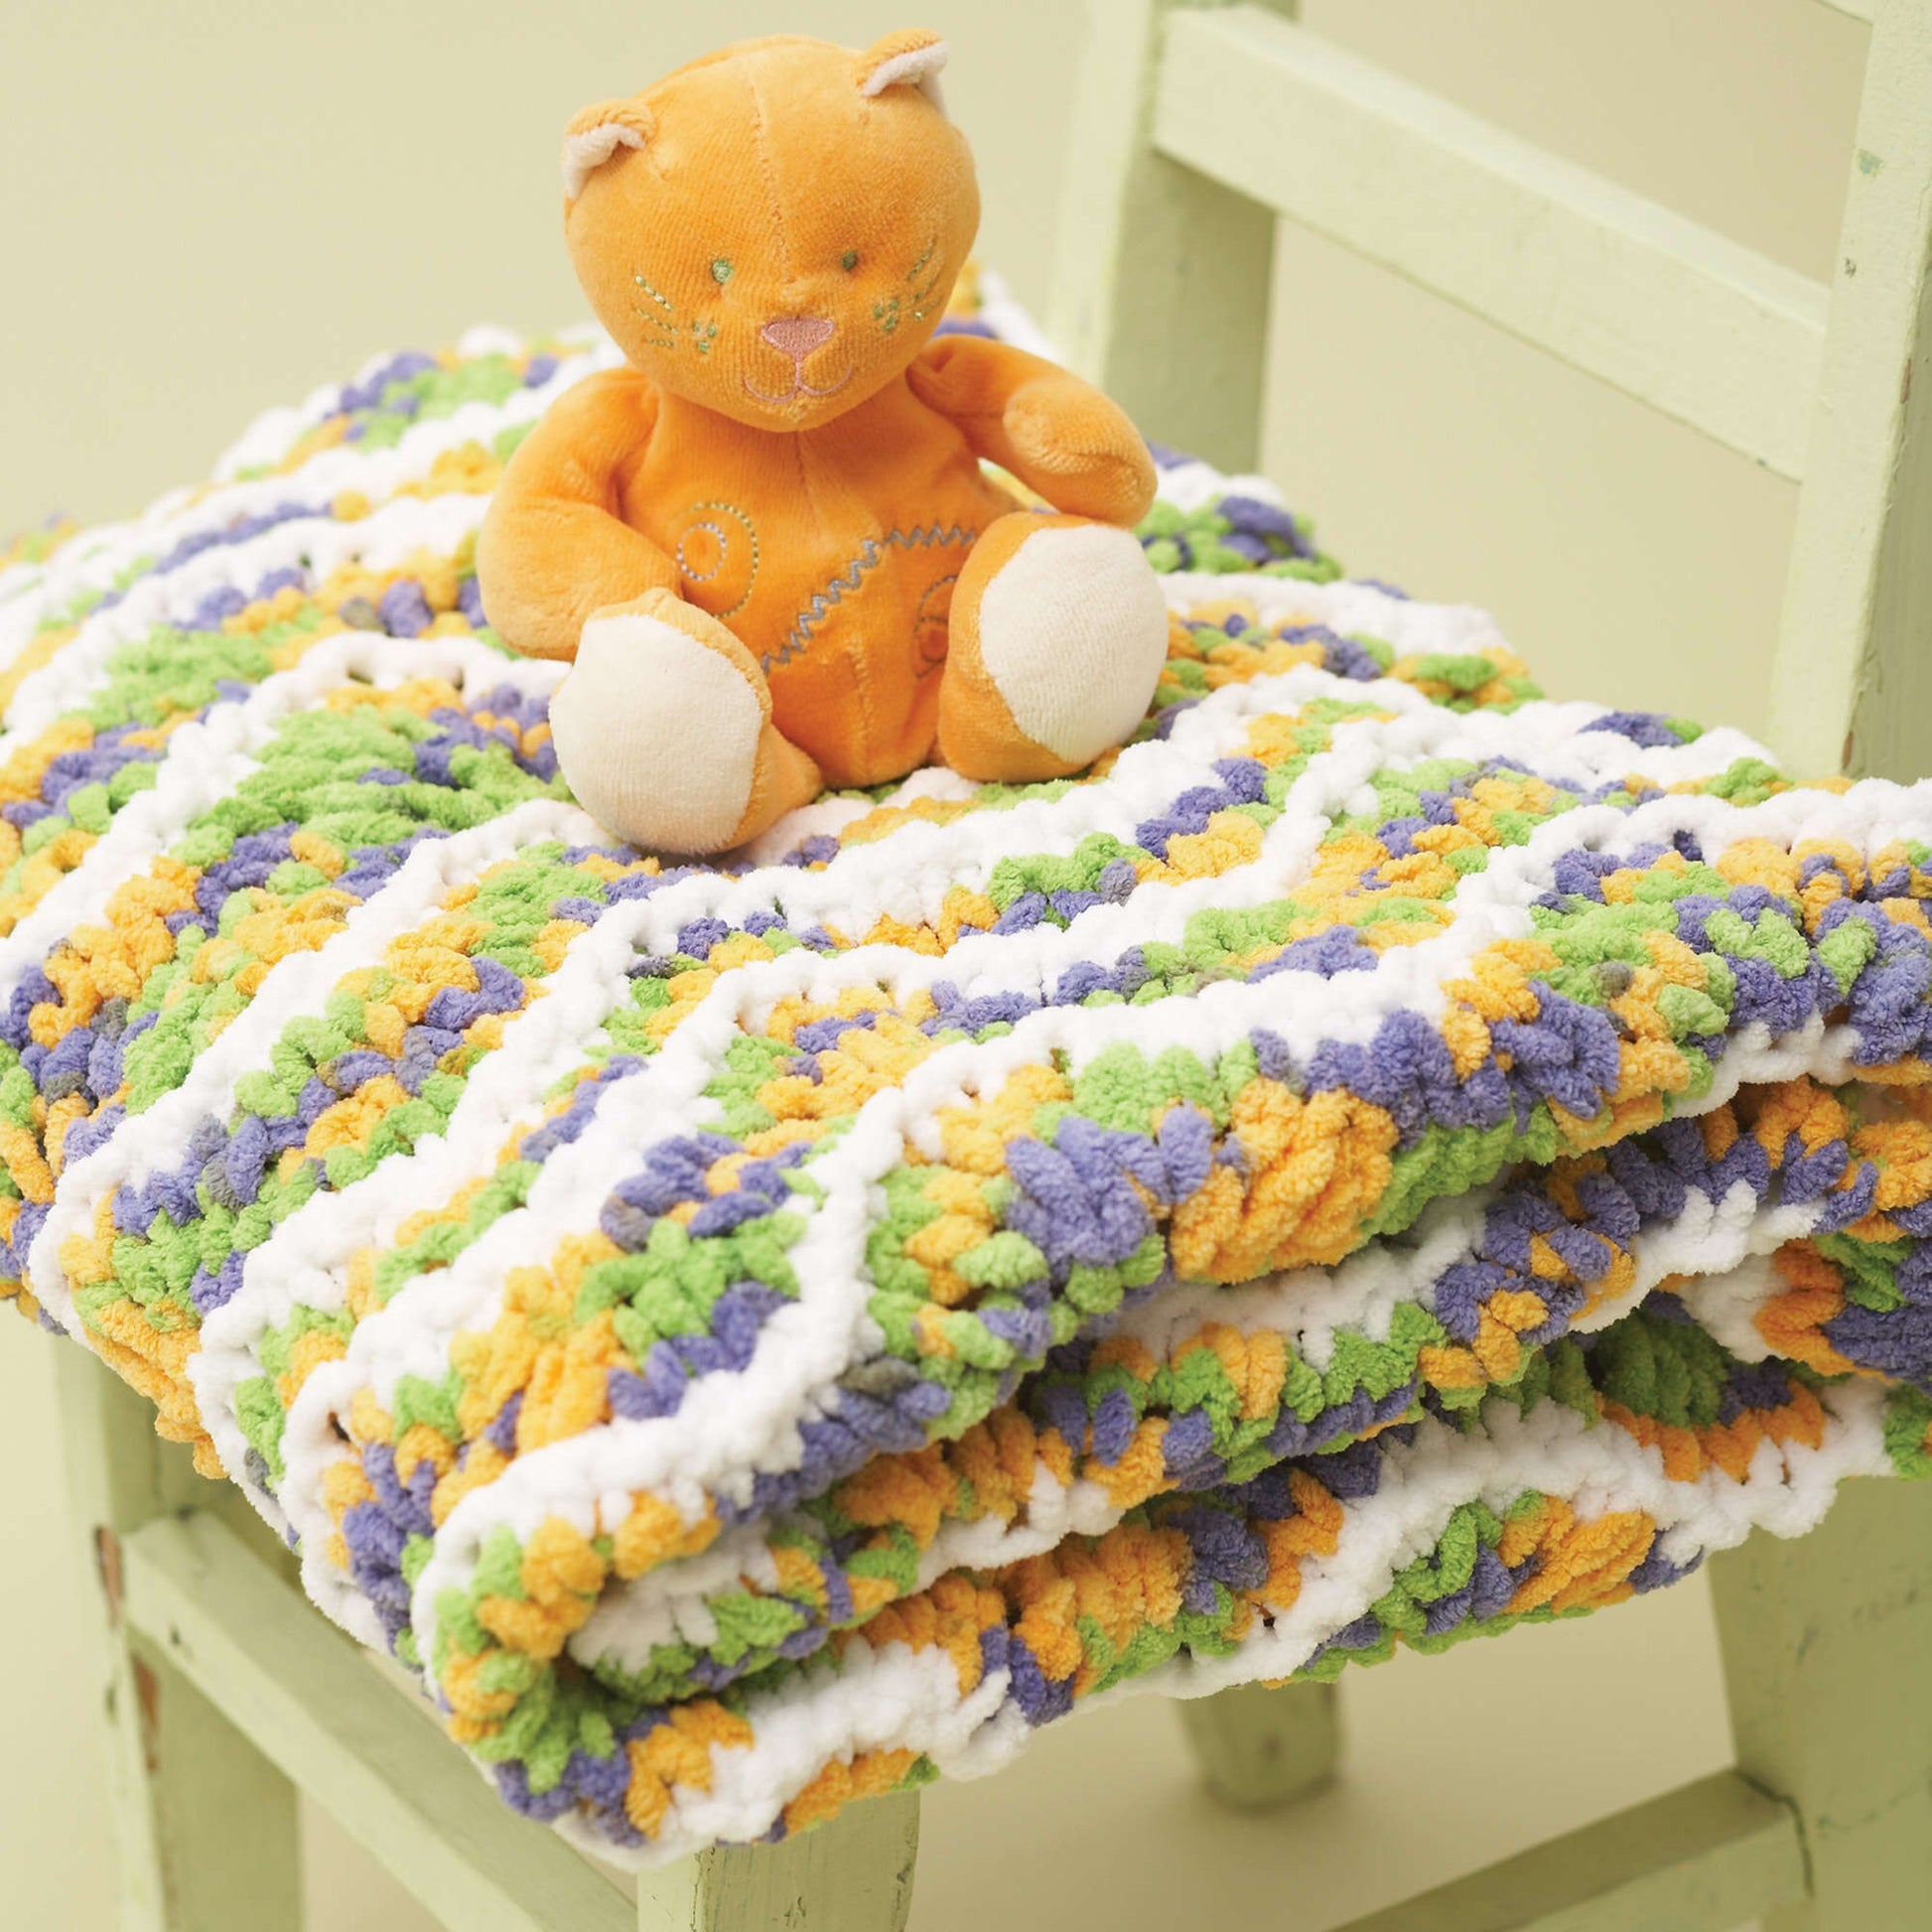 Bernat Ripple Knit Baby Blanket Knit Blanket made in Bernat Baby Blanket yarn